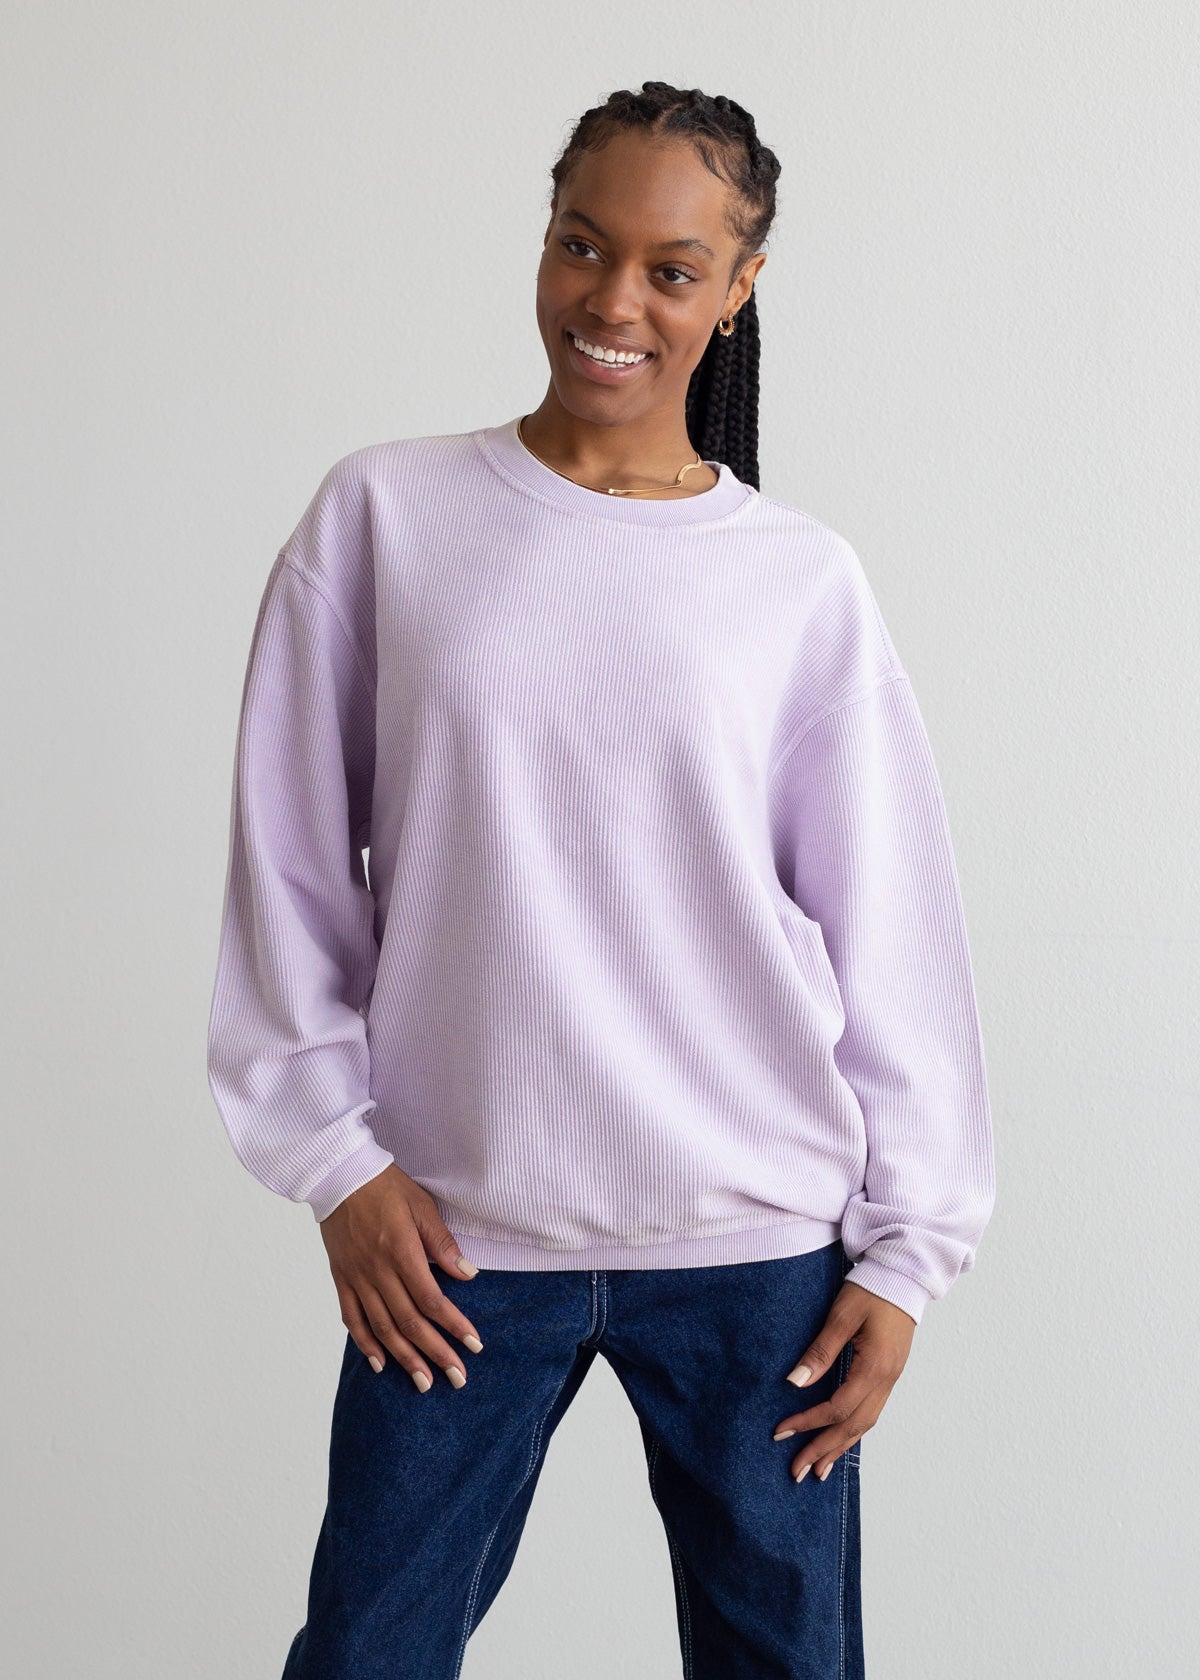 Women's Established & Co. Purple LSU Tigers Fashion Boxy Cropped Football Jersey Size: Large